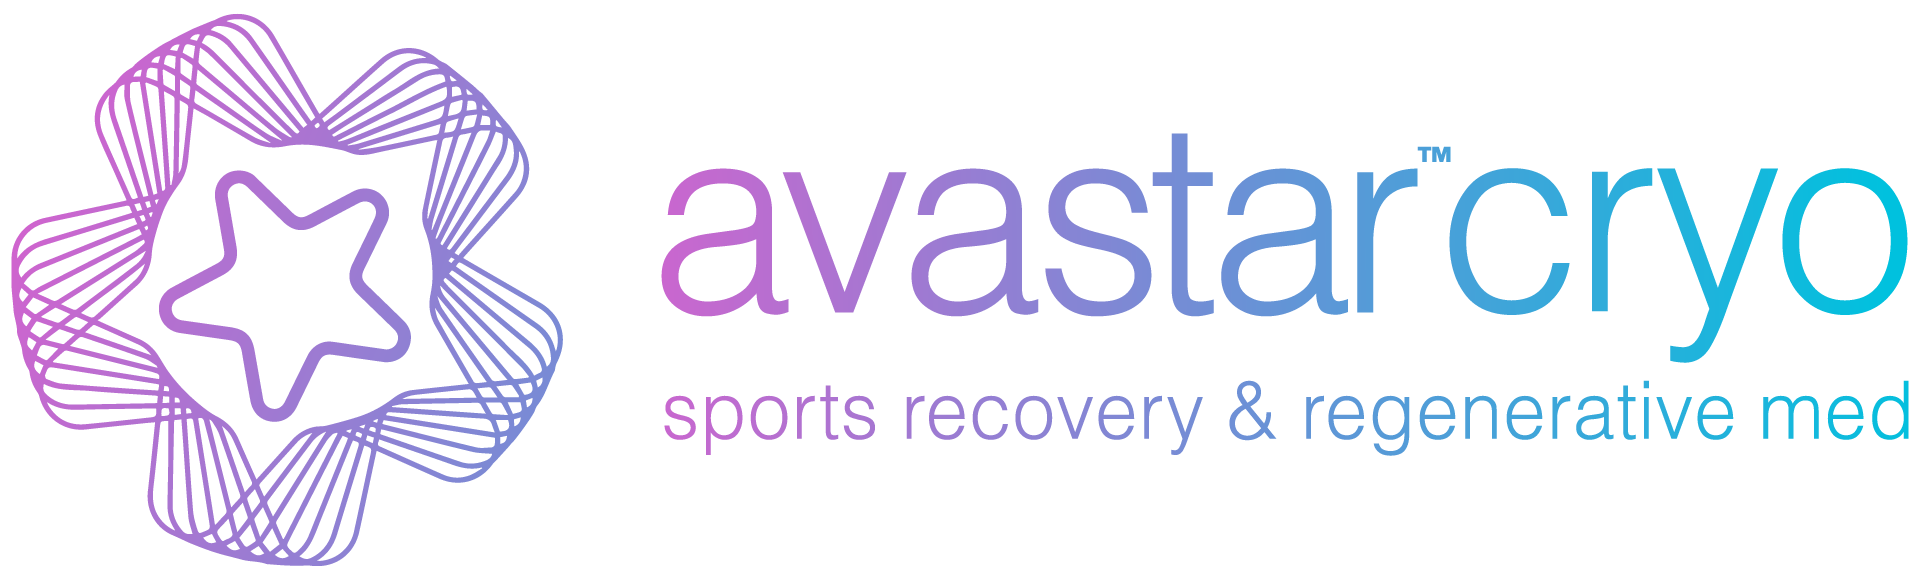 Dr. Patrick, Delray Beach Cryo is now Avastar Cryo, Sports Recovery & Regenerative Medicine